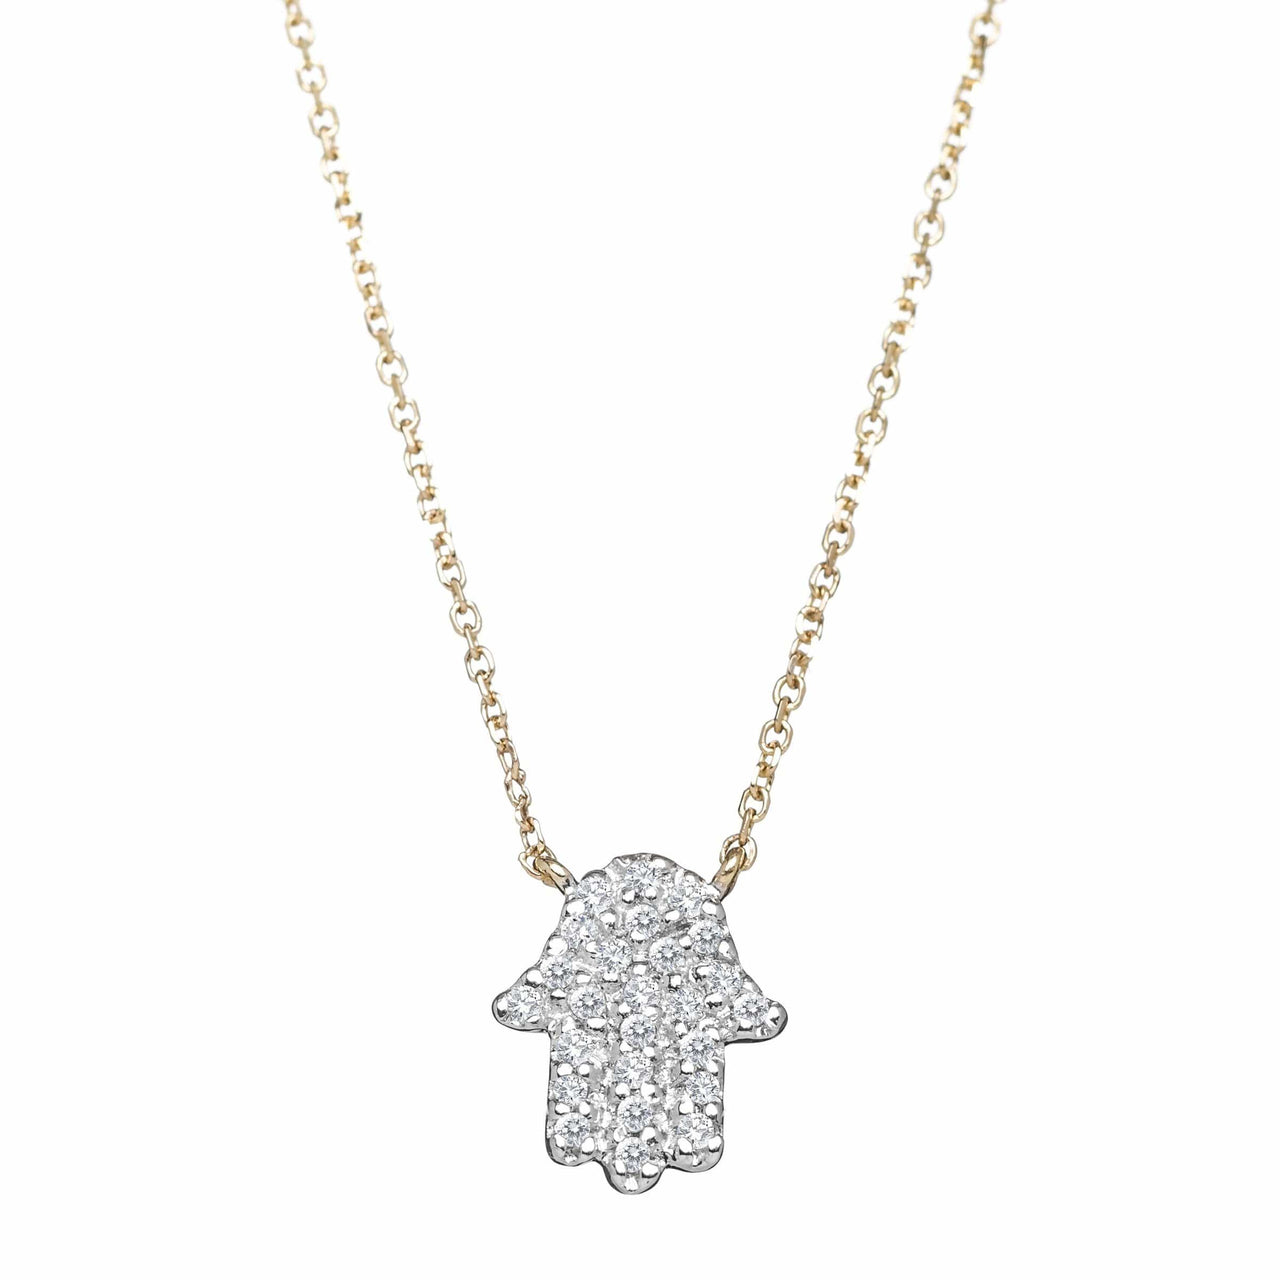 Diamond Hamsa Necklace - Gold, White Gold or Rose Gold